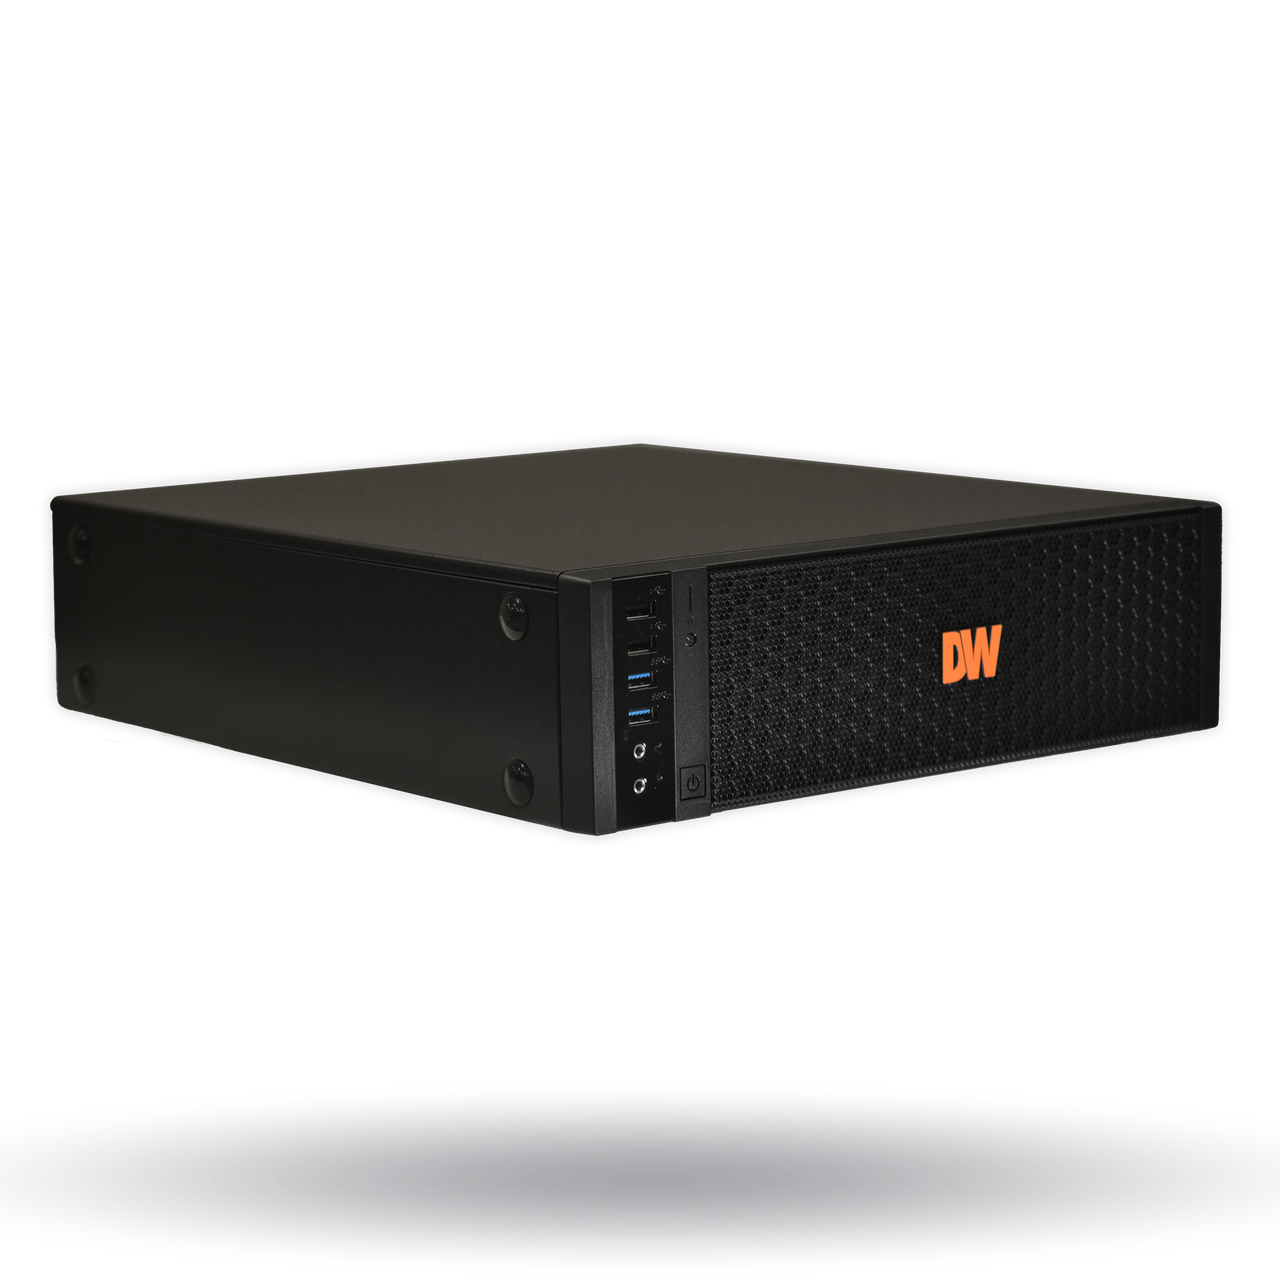 Digital Watchdog DW-BJDX3104T 4-channel 180Mbps Desktop Video Server, i3 CPU, Windows 10 OS, 4TB HDD, NDAA Compliant